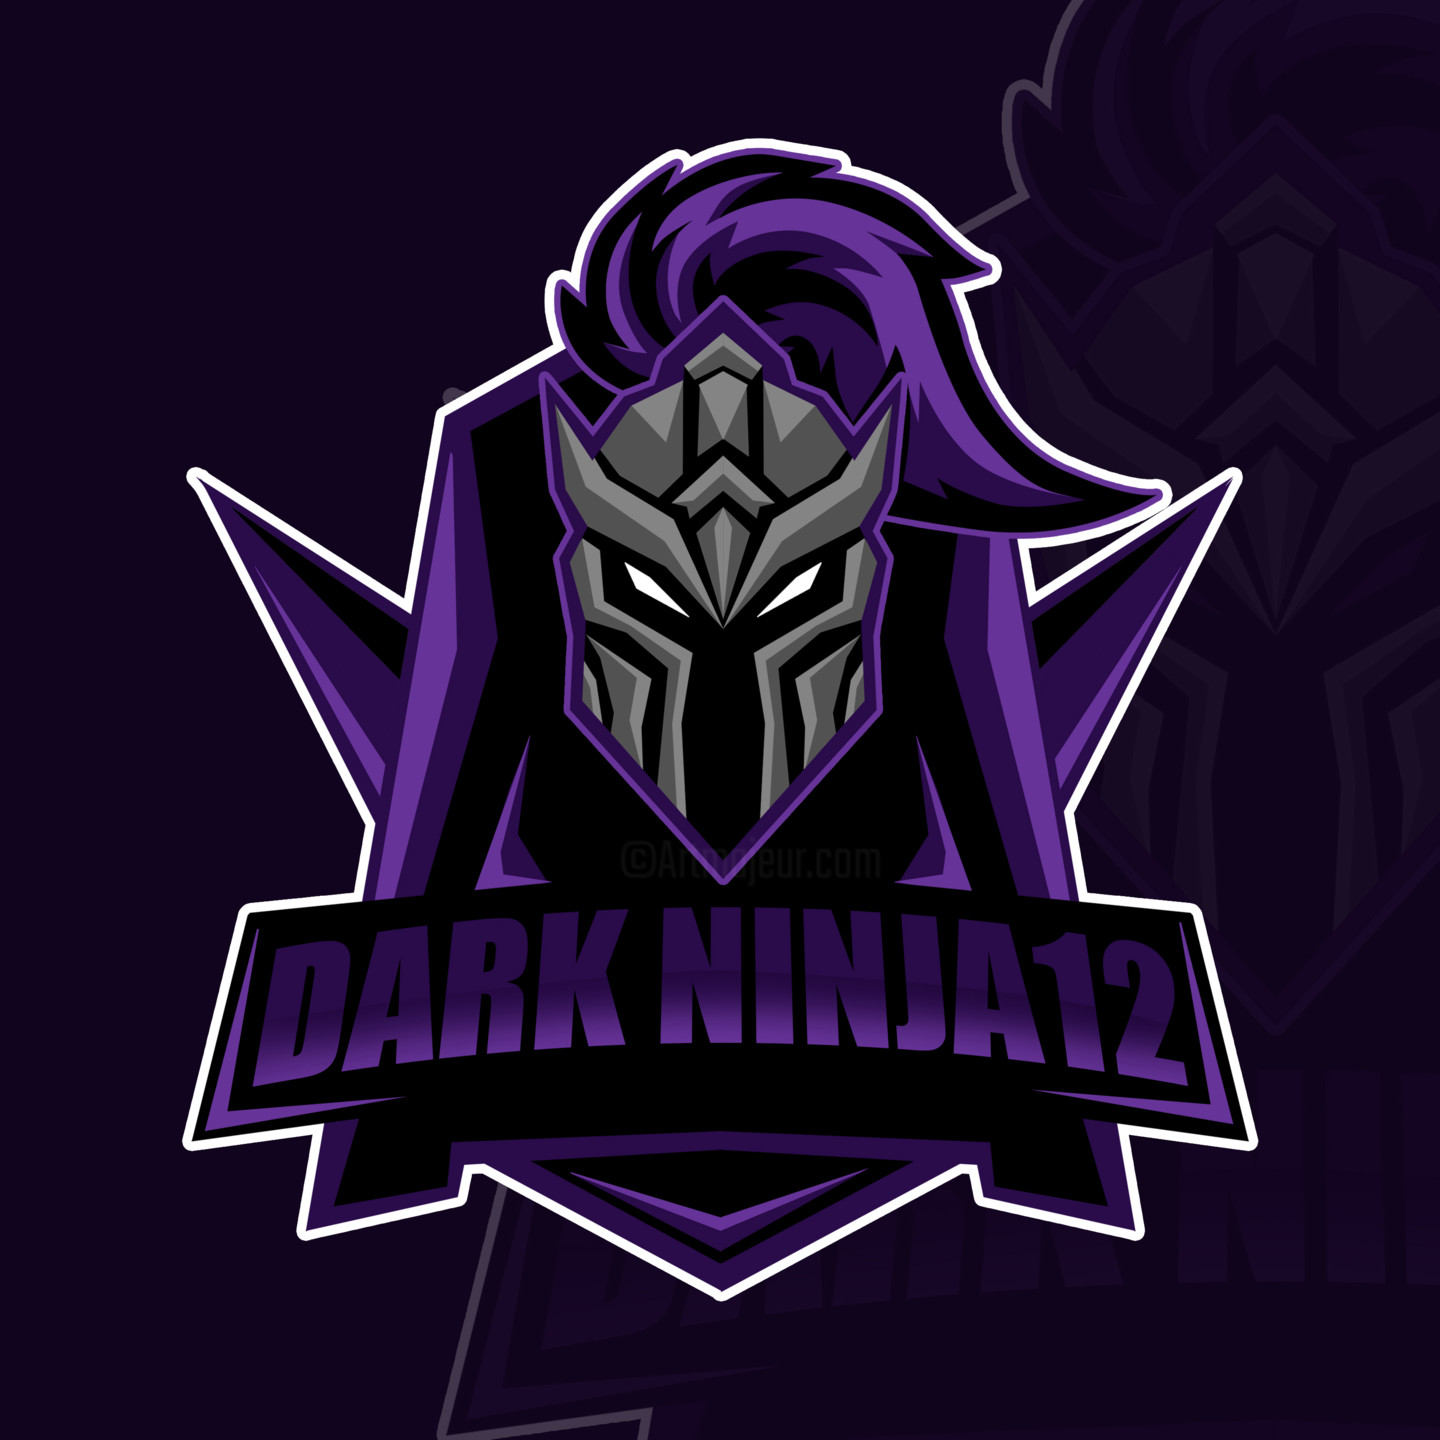 Ninja Gamer Logo